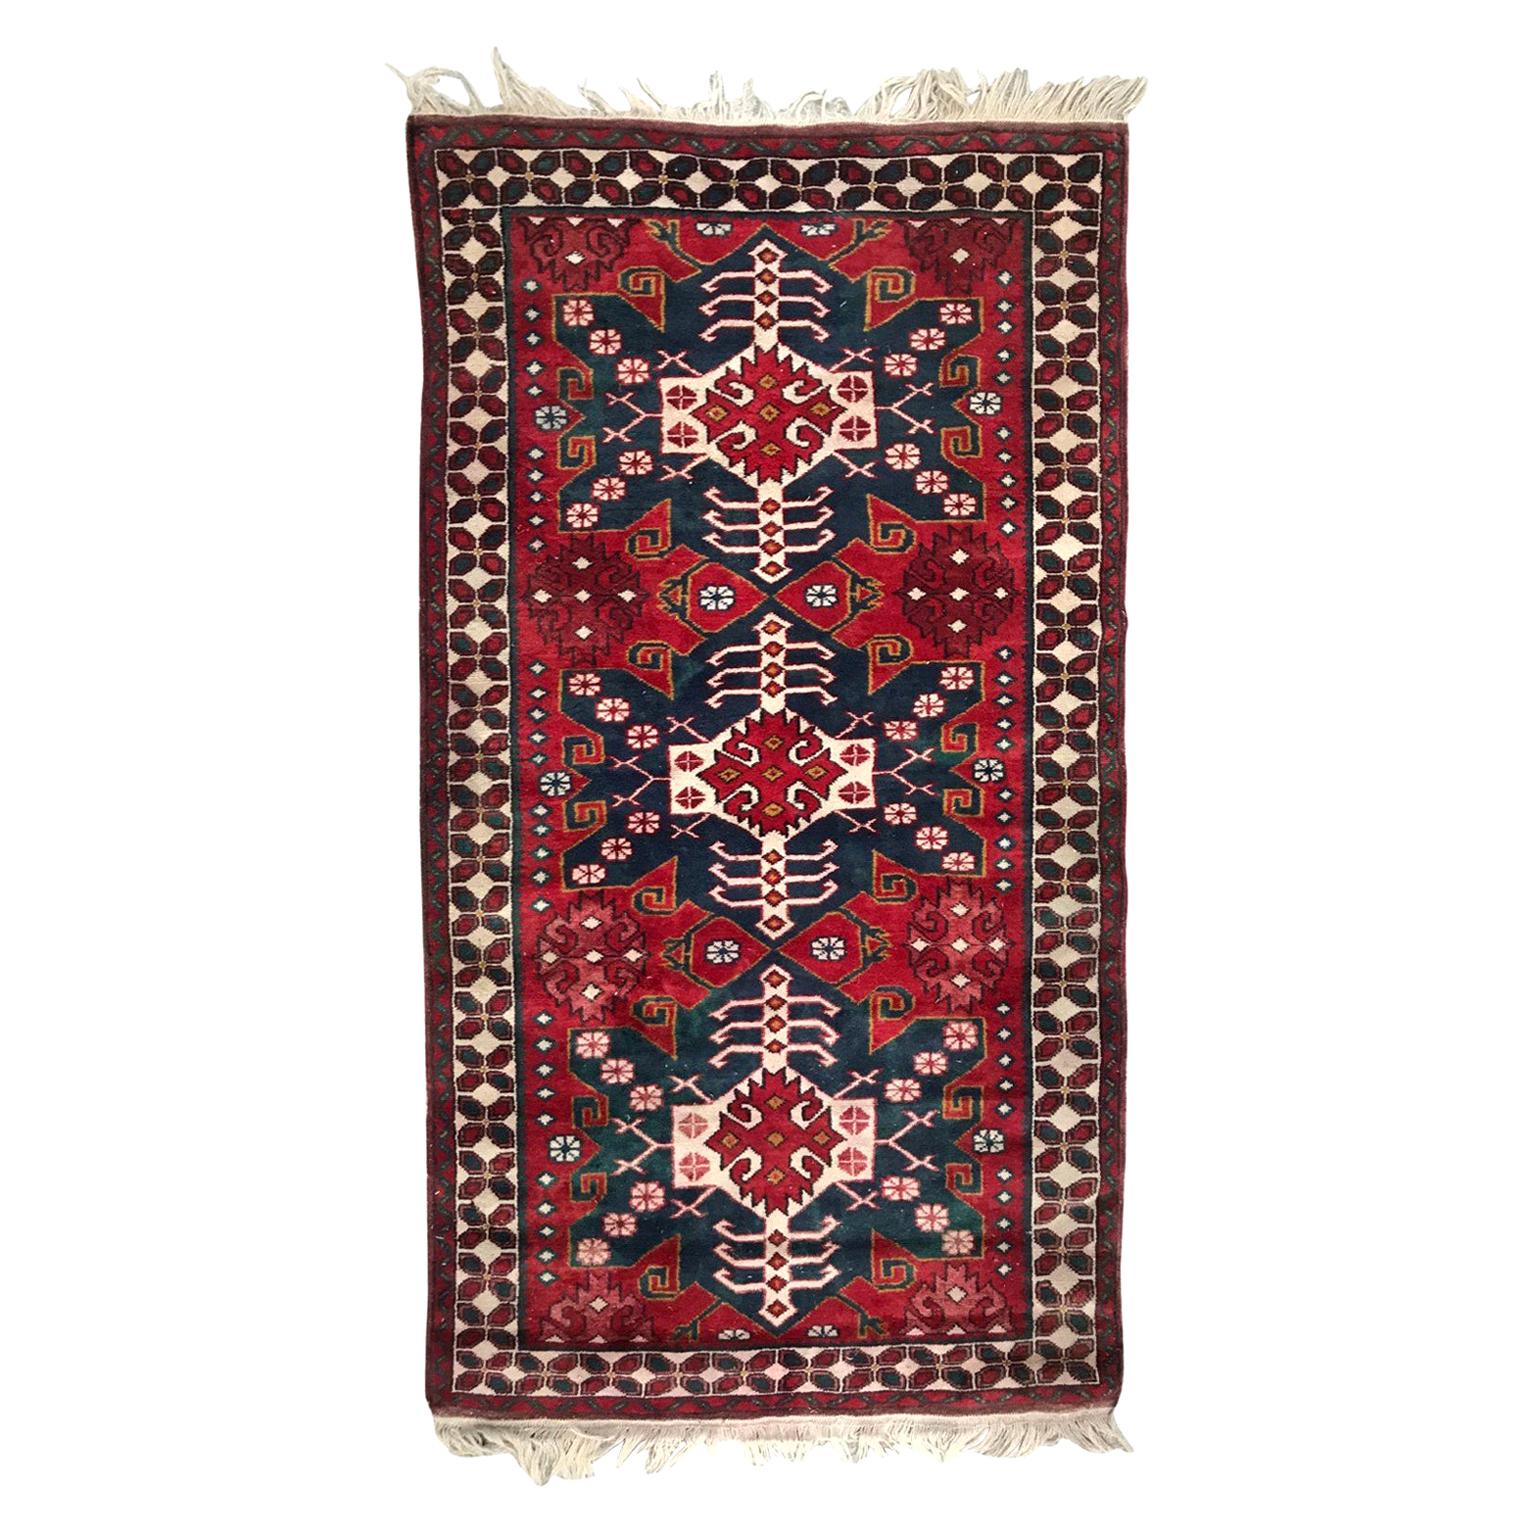 Bobyrug’s Turkish Konya Vintage Rug